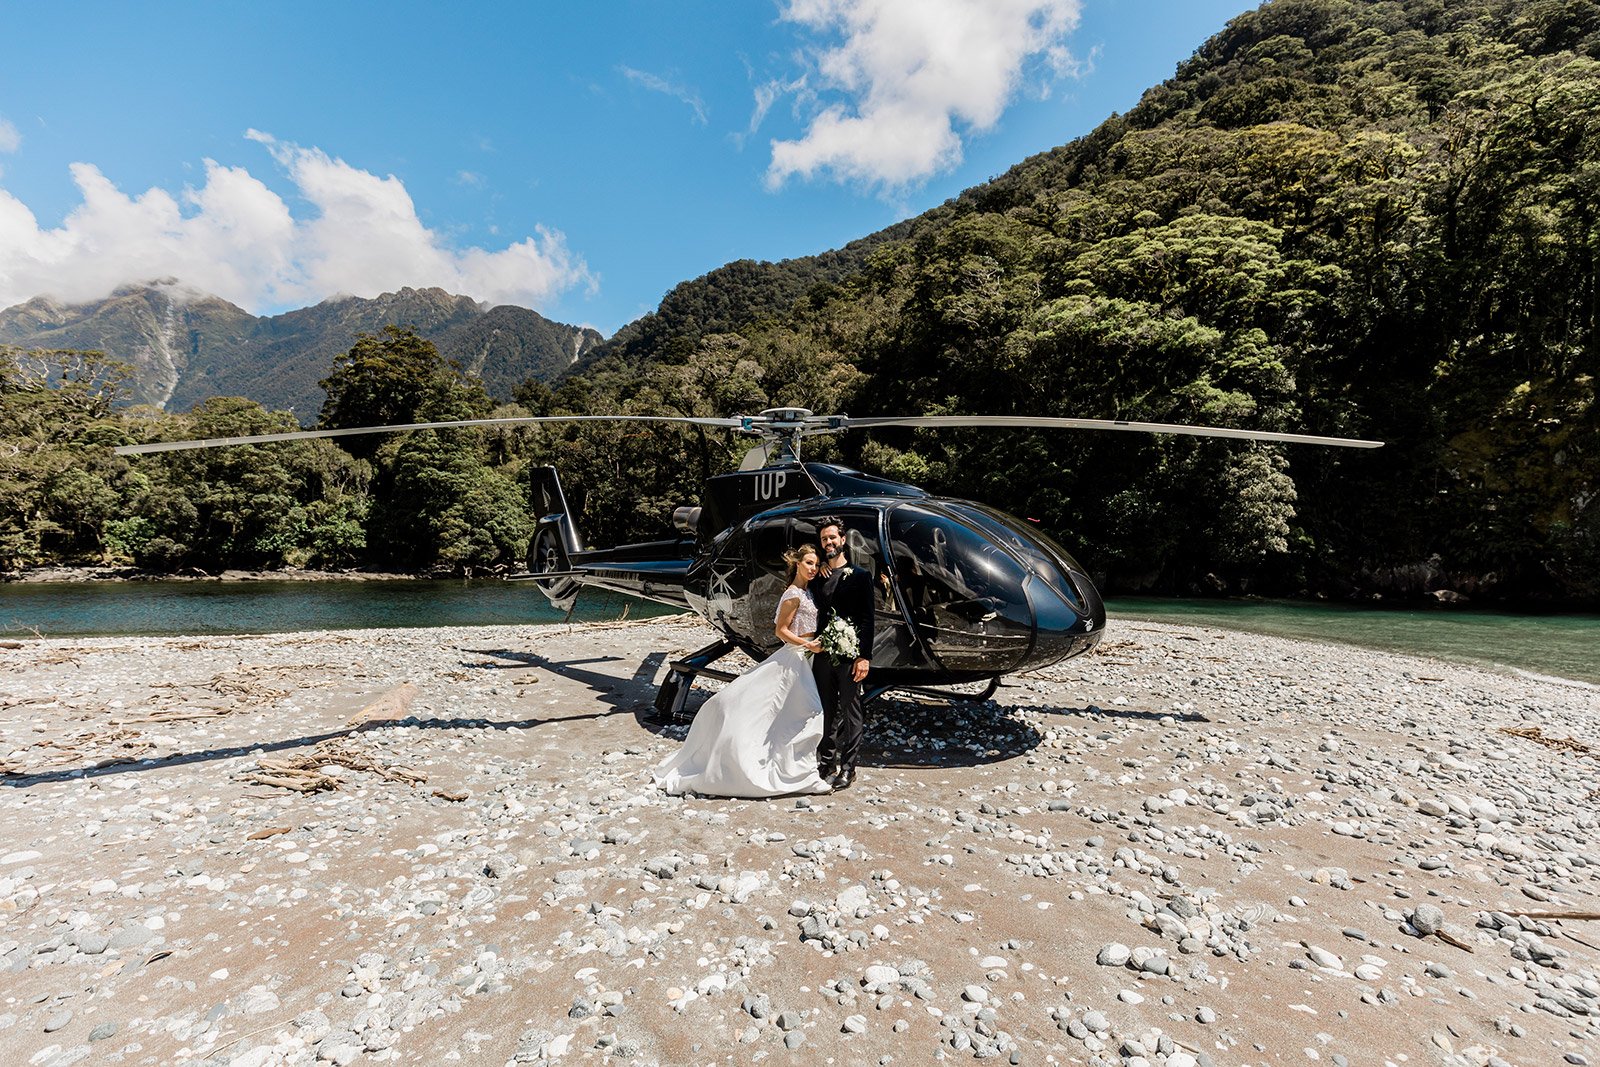 Queenstown luxury wedding with beach landing for photos